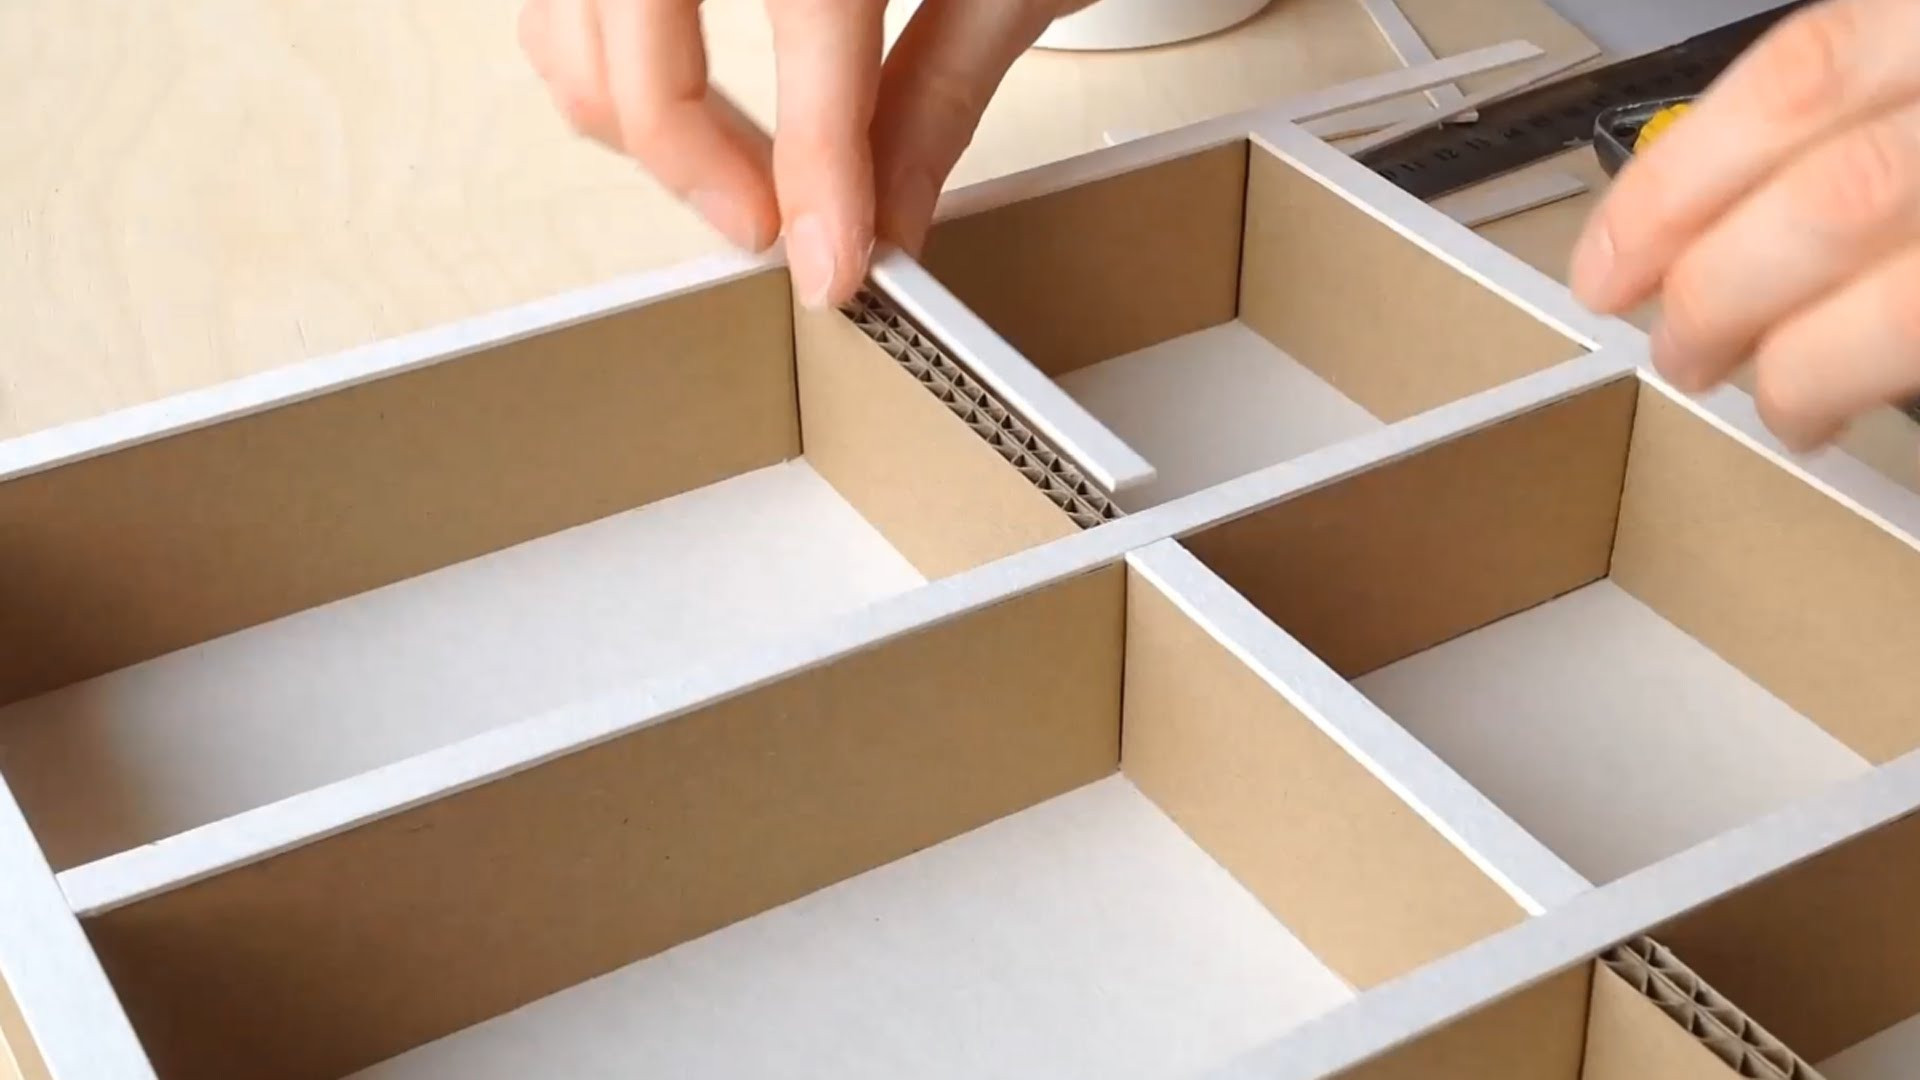 Cardboard Organizer DIY
 Learn How to Make a DIY Cardboard Desktop File Organizer